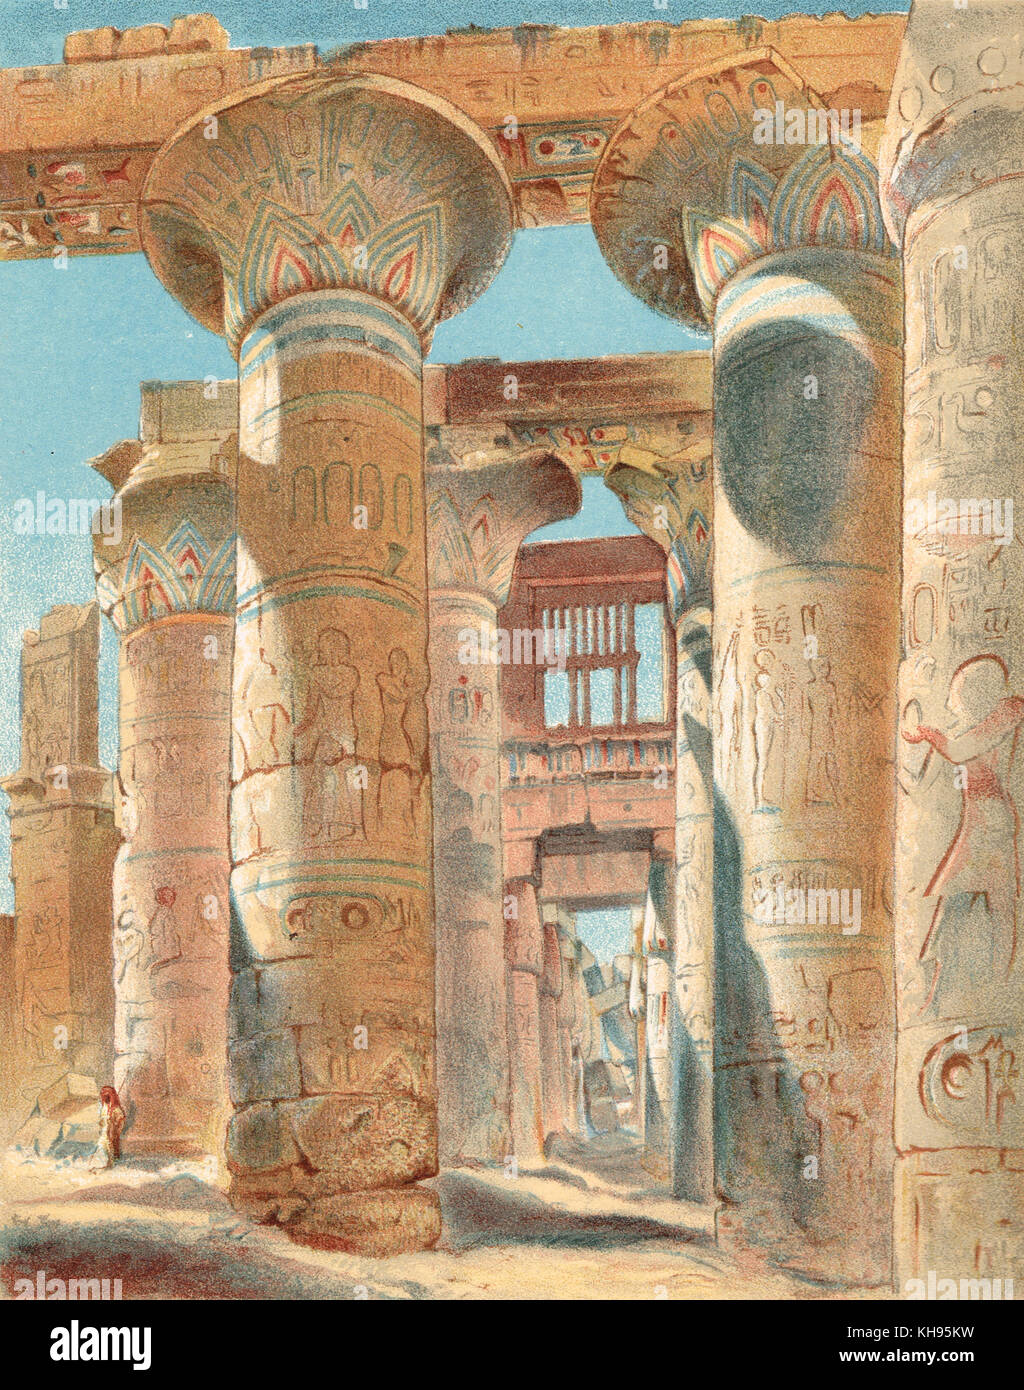 Great Hypostyle Hall, Karnak, Egypt, 19th century colour lithograph Stock Photo